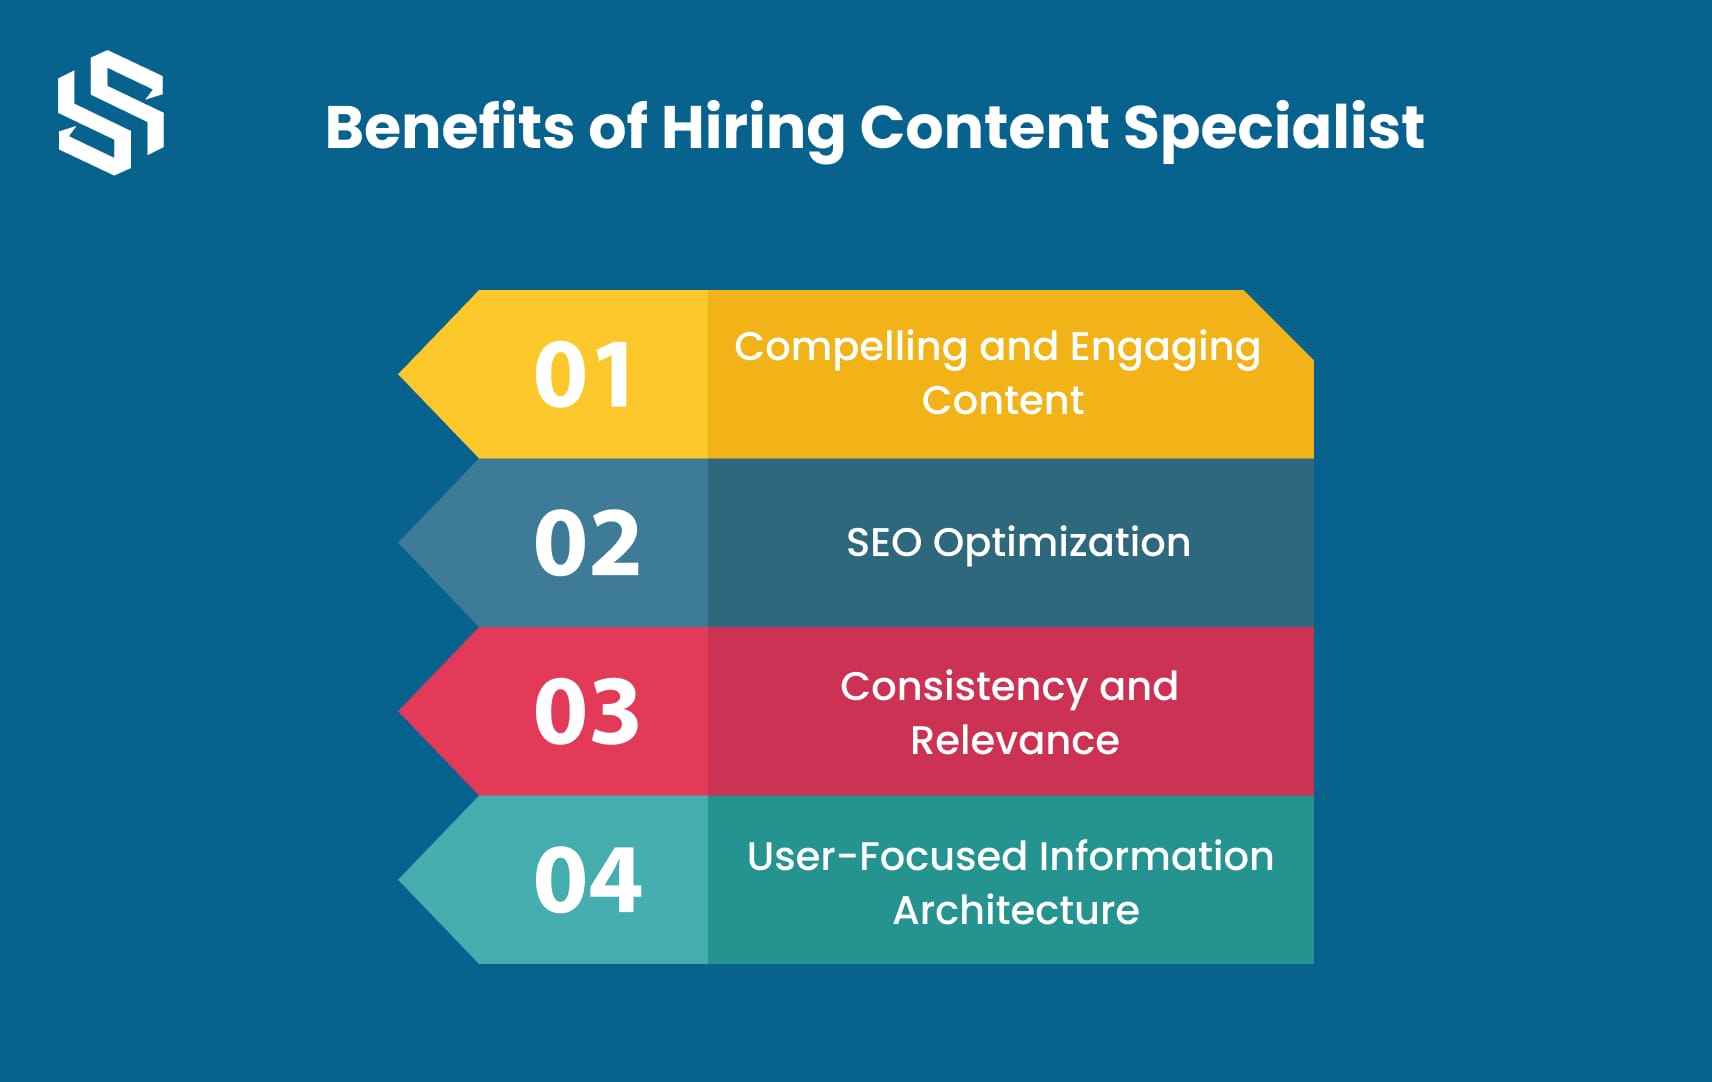 Benefits of Hiring Content Specialist